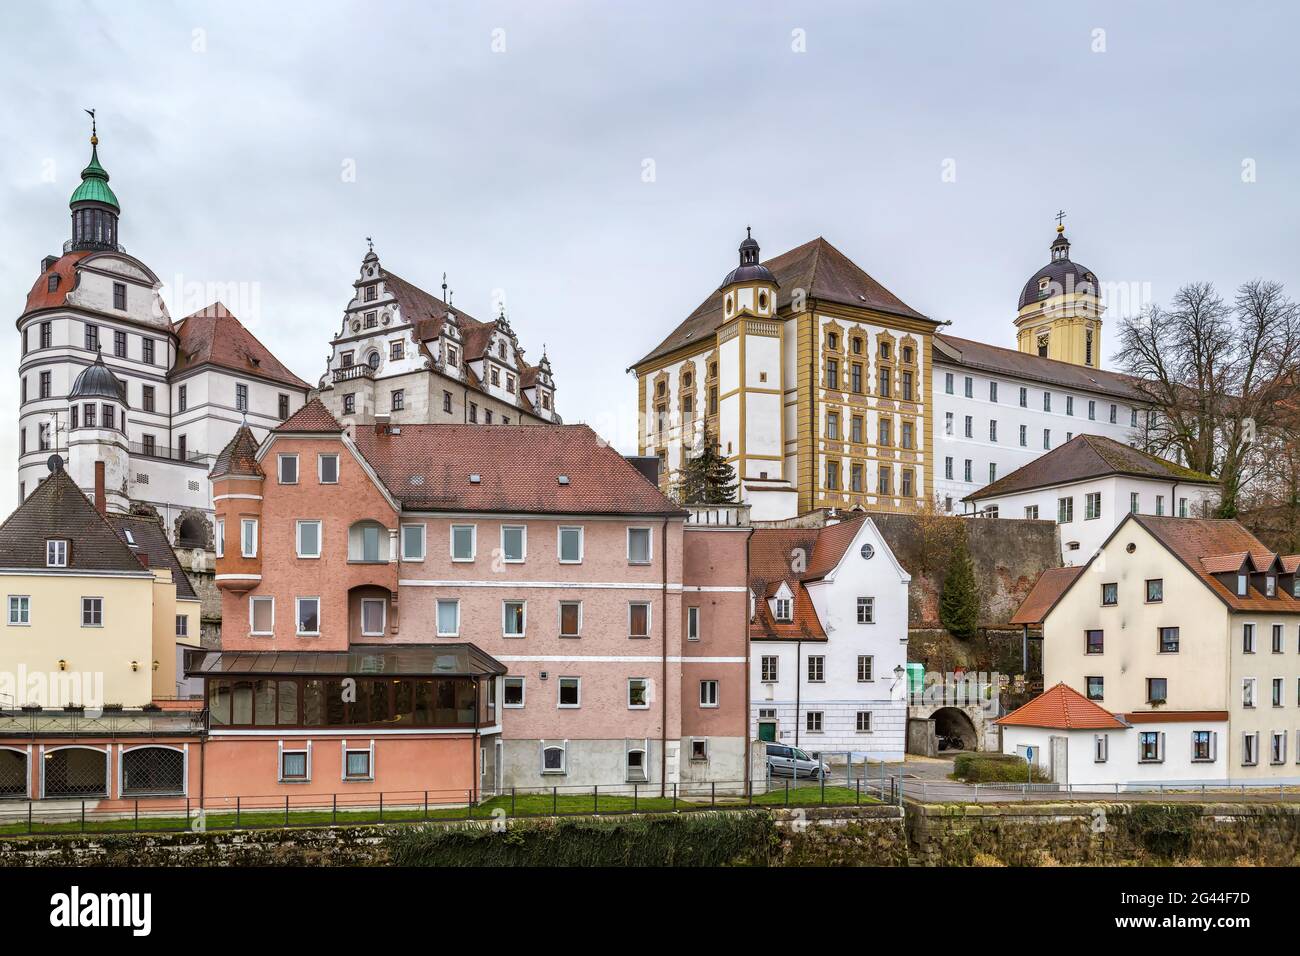 View of castle, Neuburg an der Donau, Germany Stock Photo